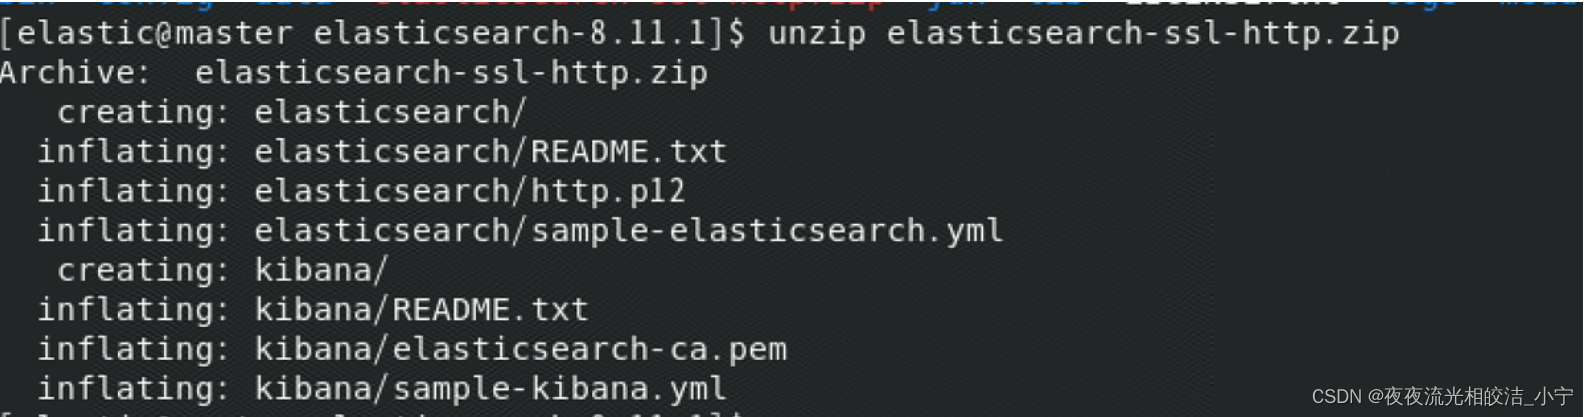 Elasticsearch-8.11.1 （2+1）HA（高可用）集群部署